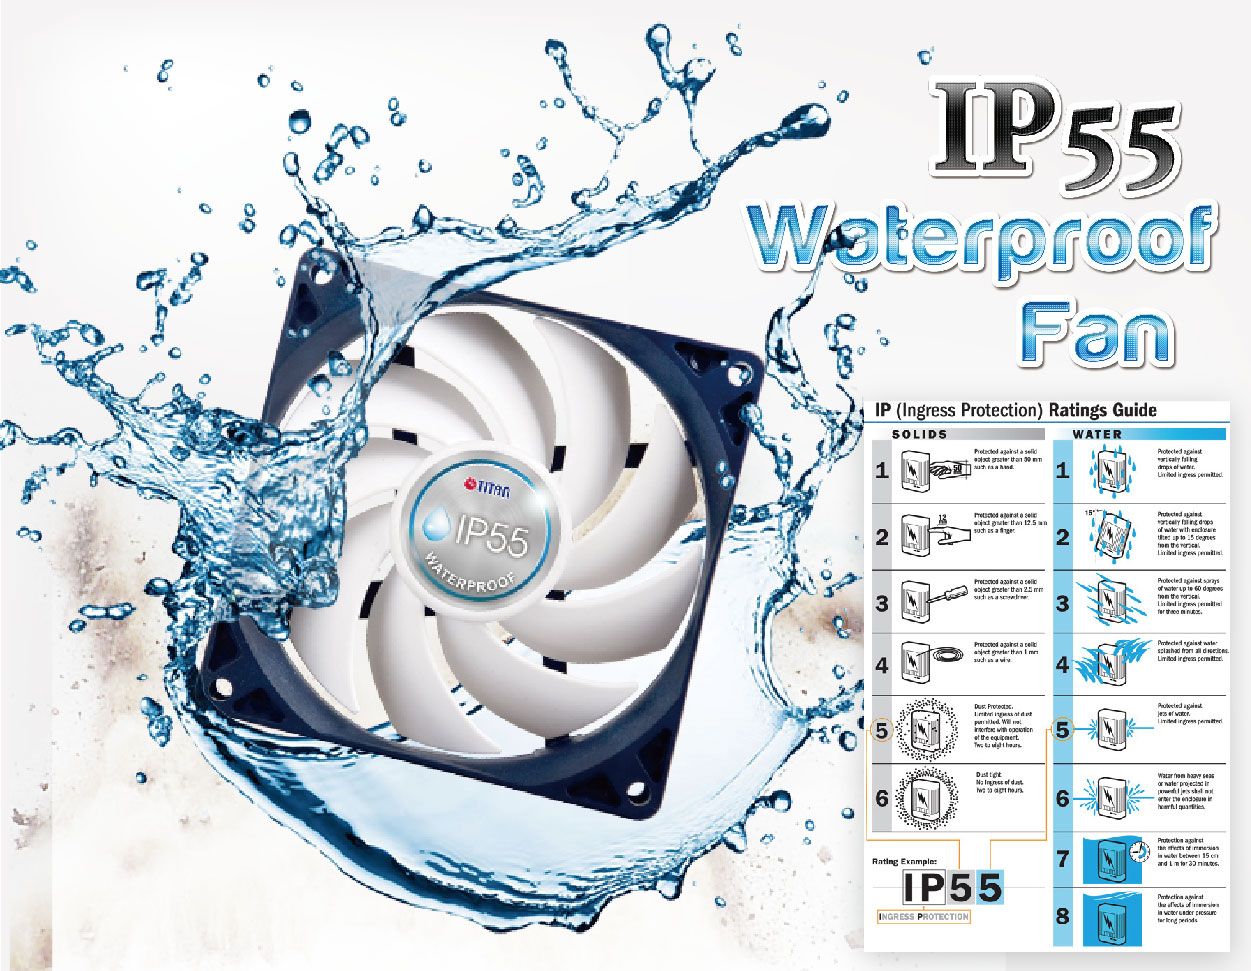 El ventilador a prueba de agua IP55 es la característica crucial del ventilador RV